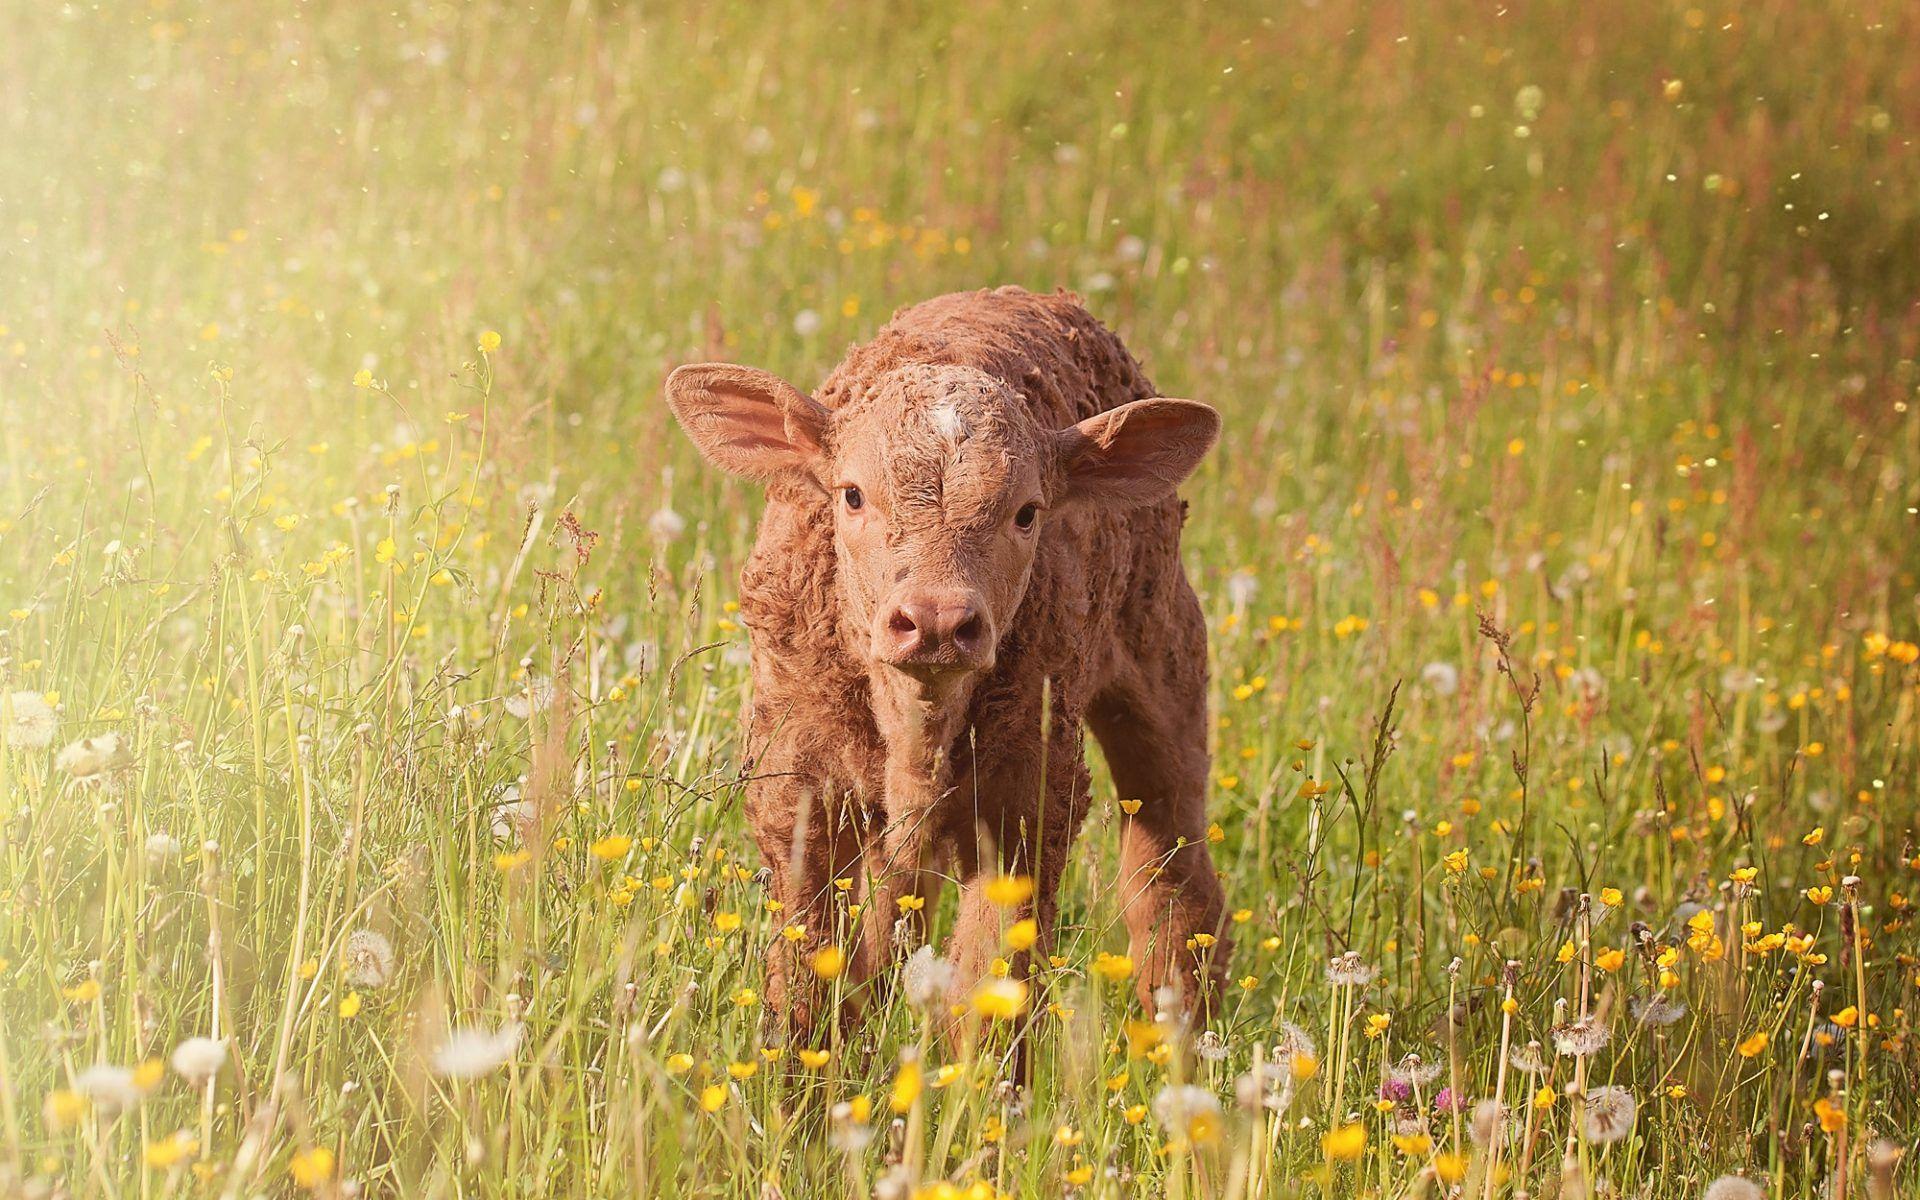 Brown calf in grass (Cute) HD Wallpaper